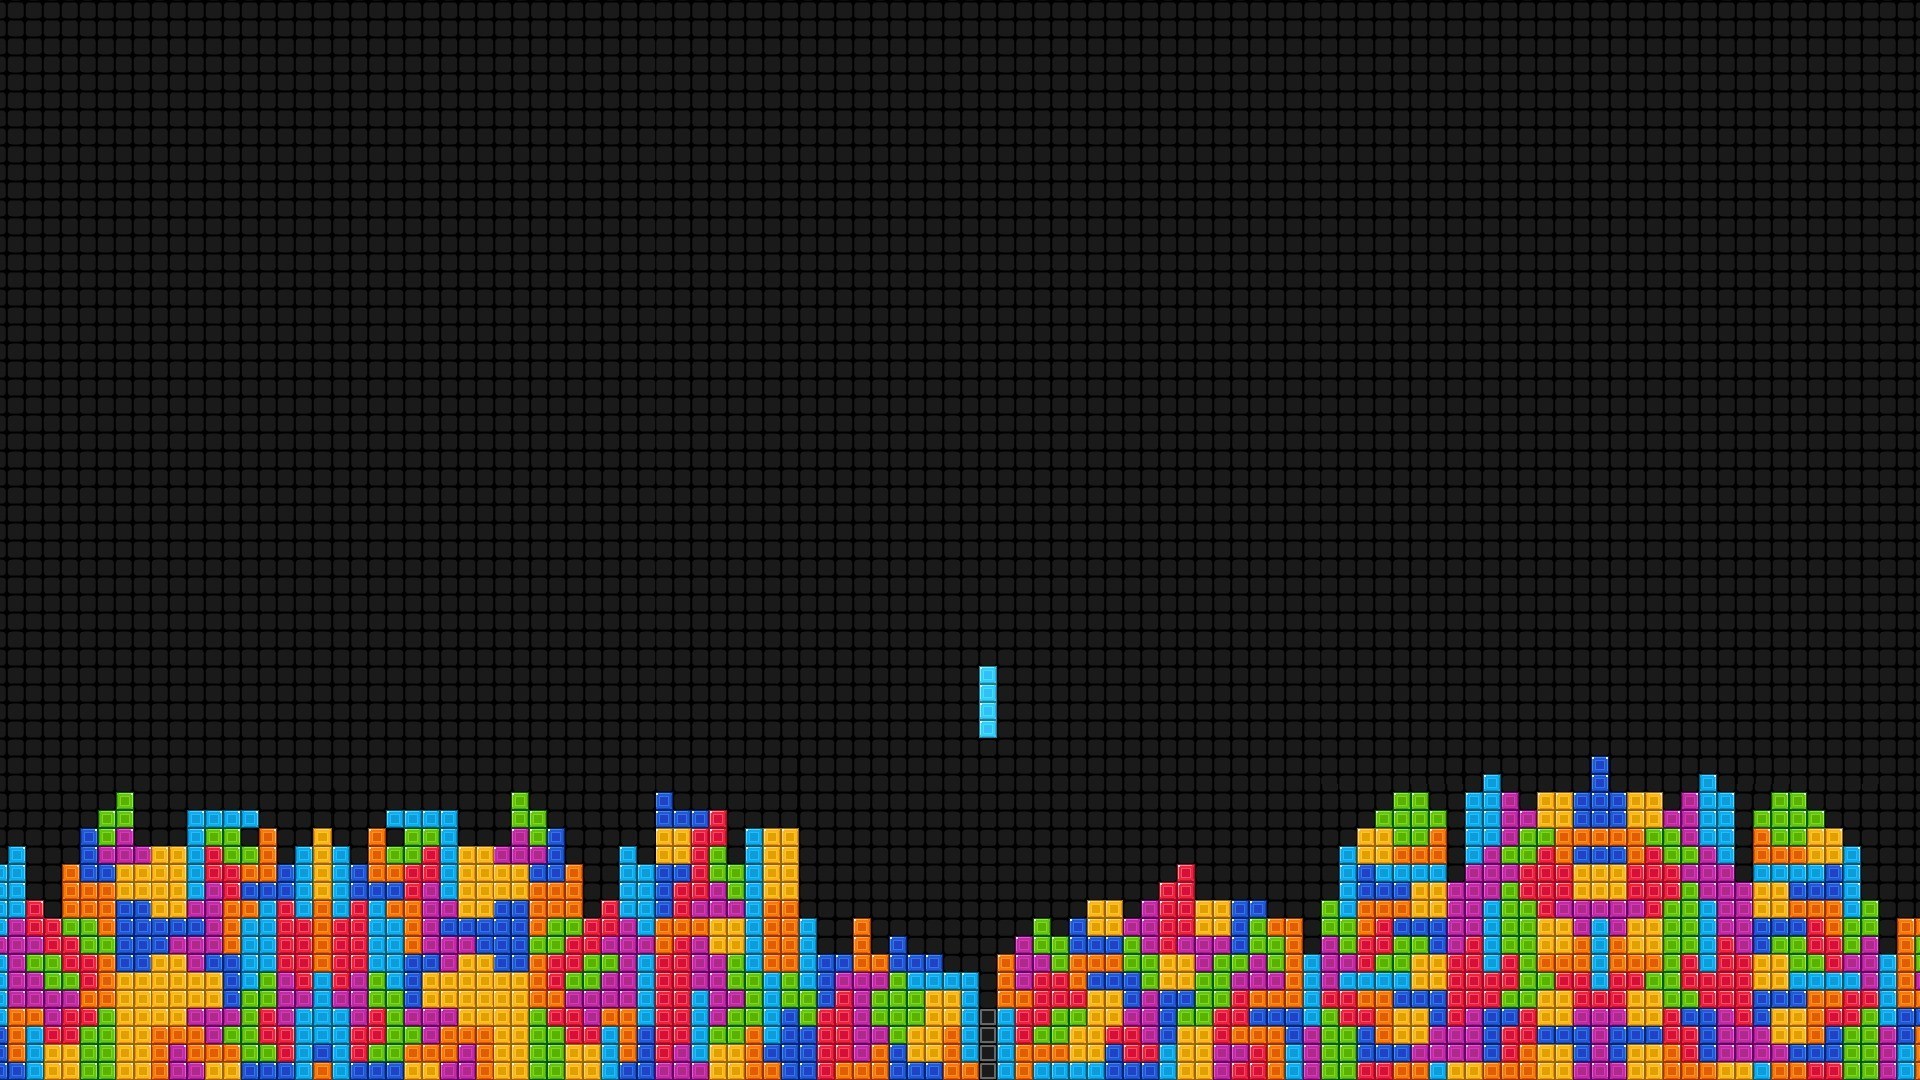 tetris wallpaper hd